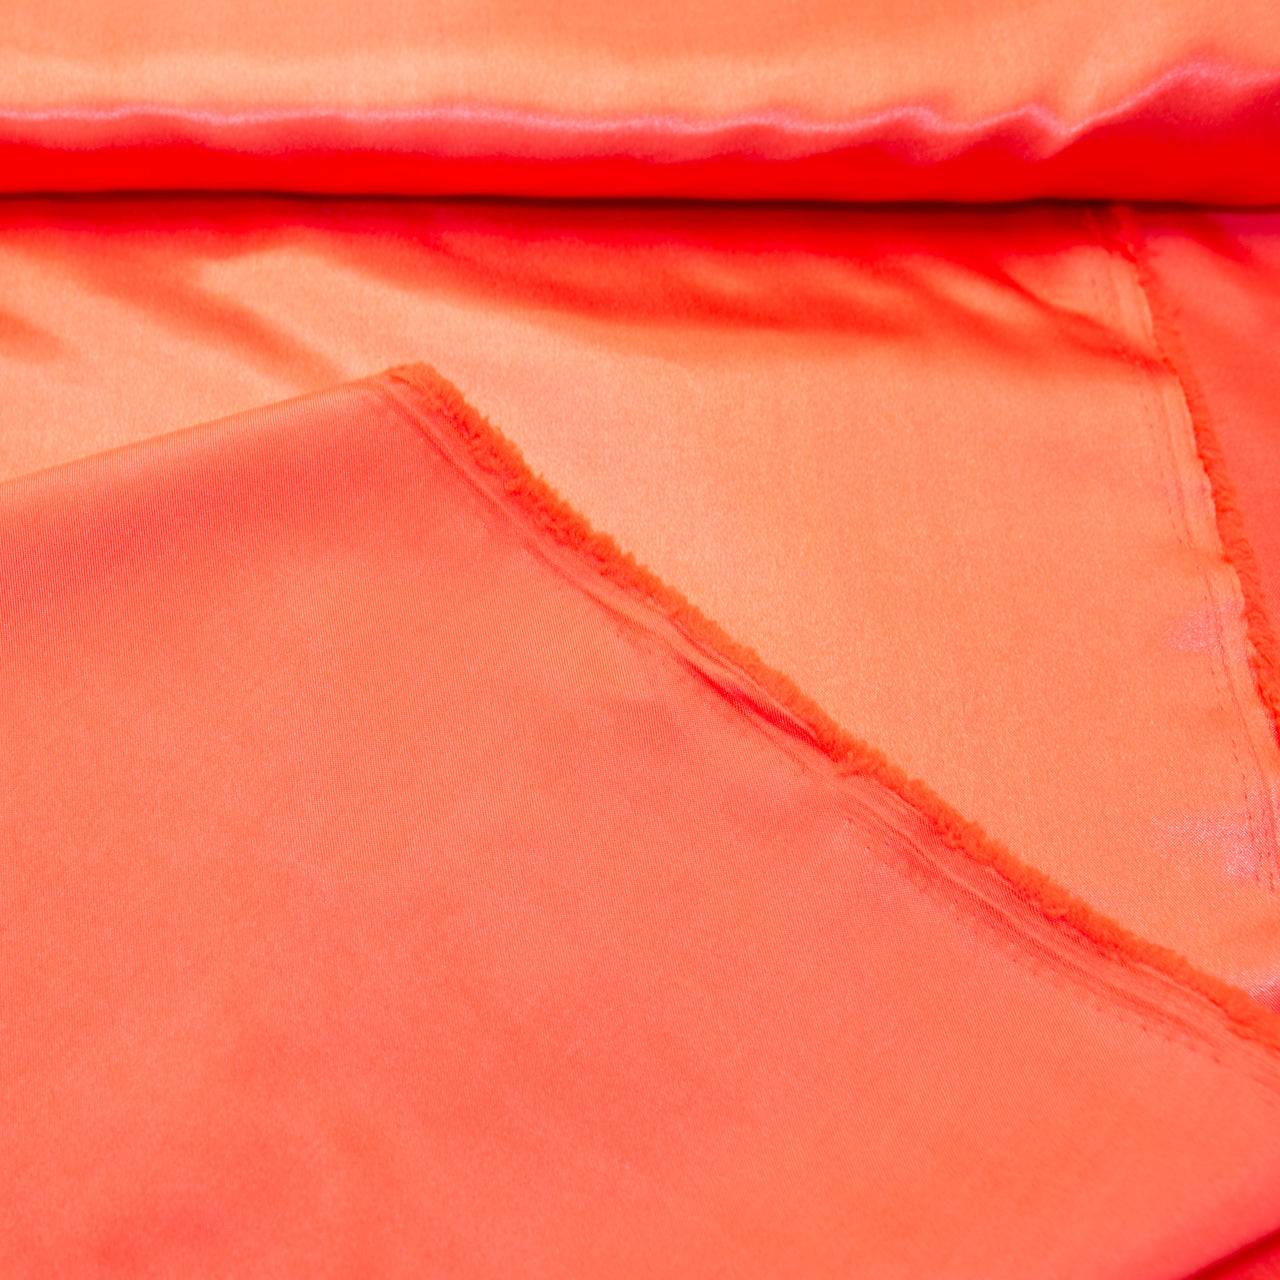 Red Satin Lining Fabric